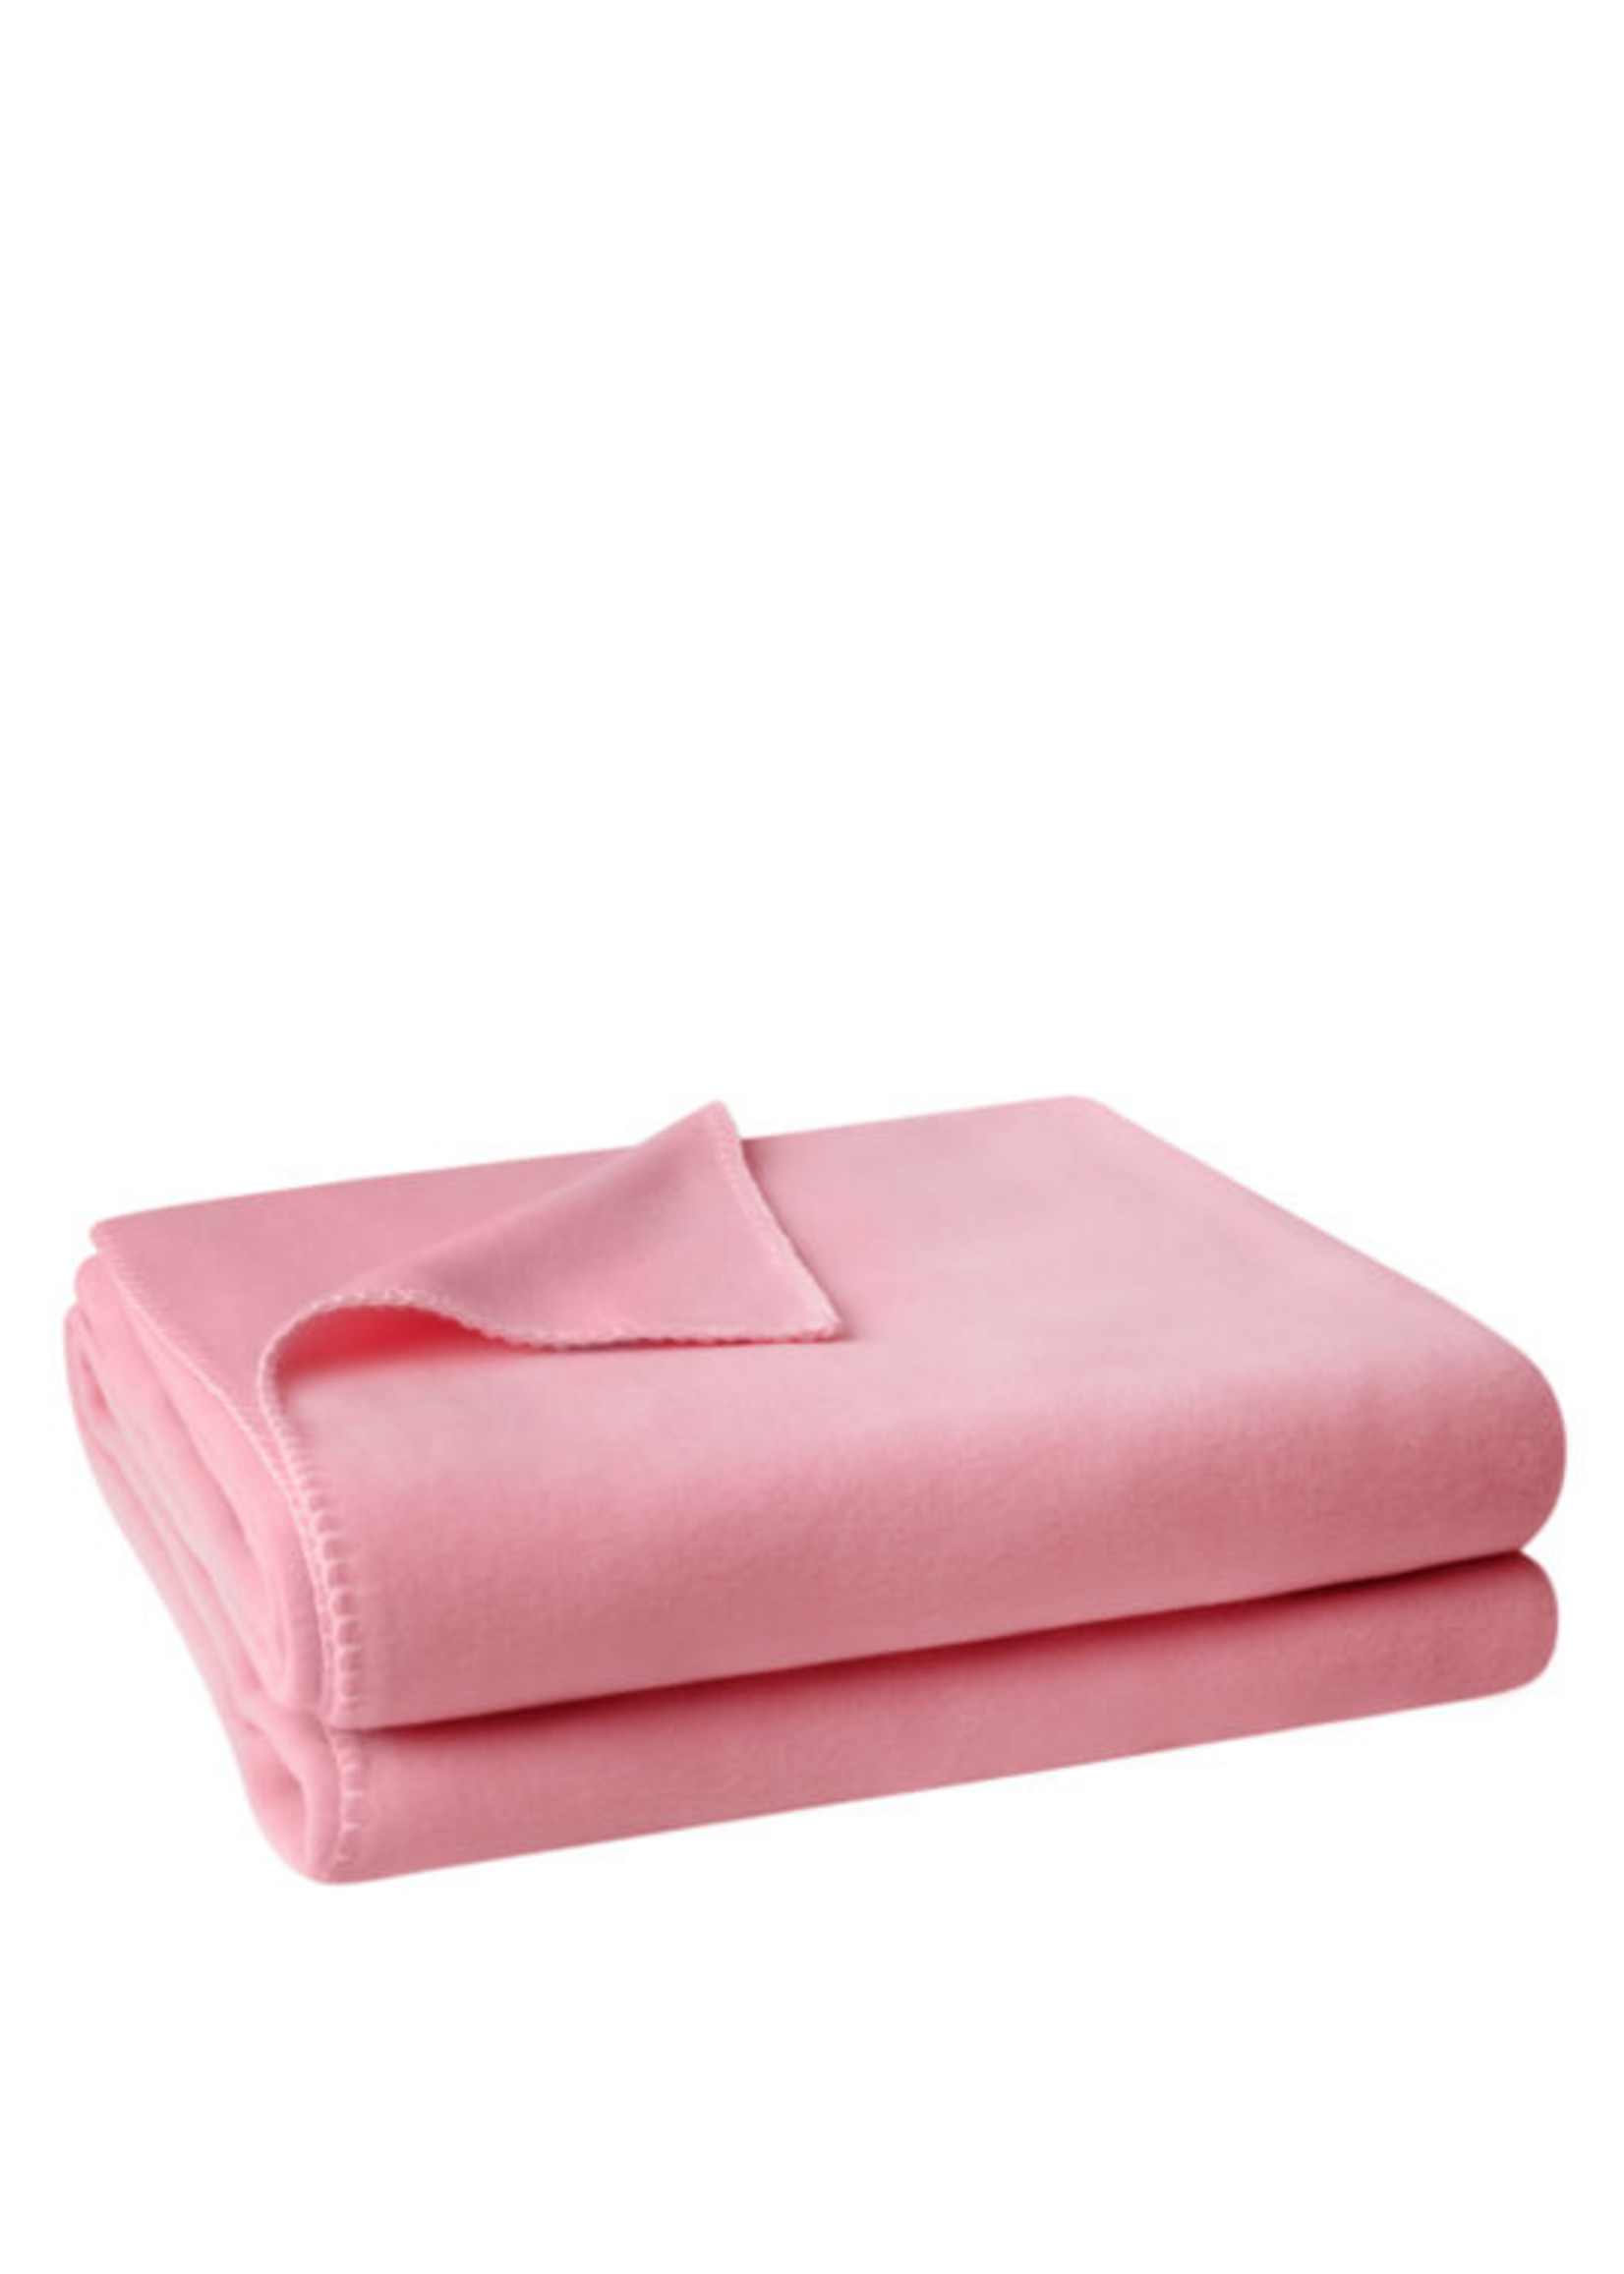 Zoeppritz Plaid Zoeppritz Soft Fleece, Dusky Pink, kleur 321